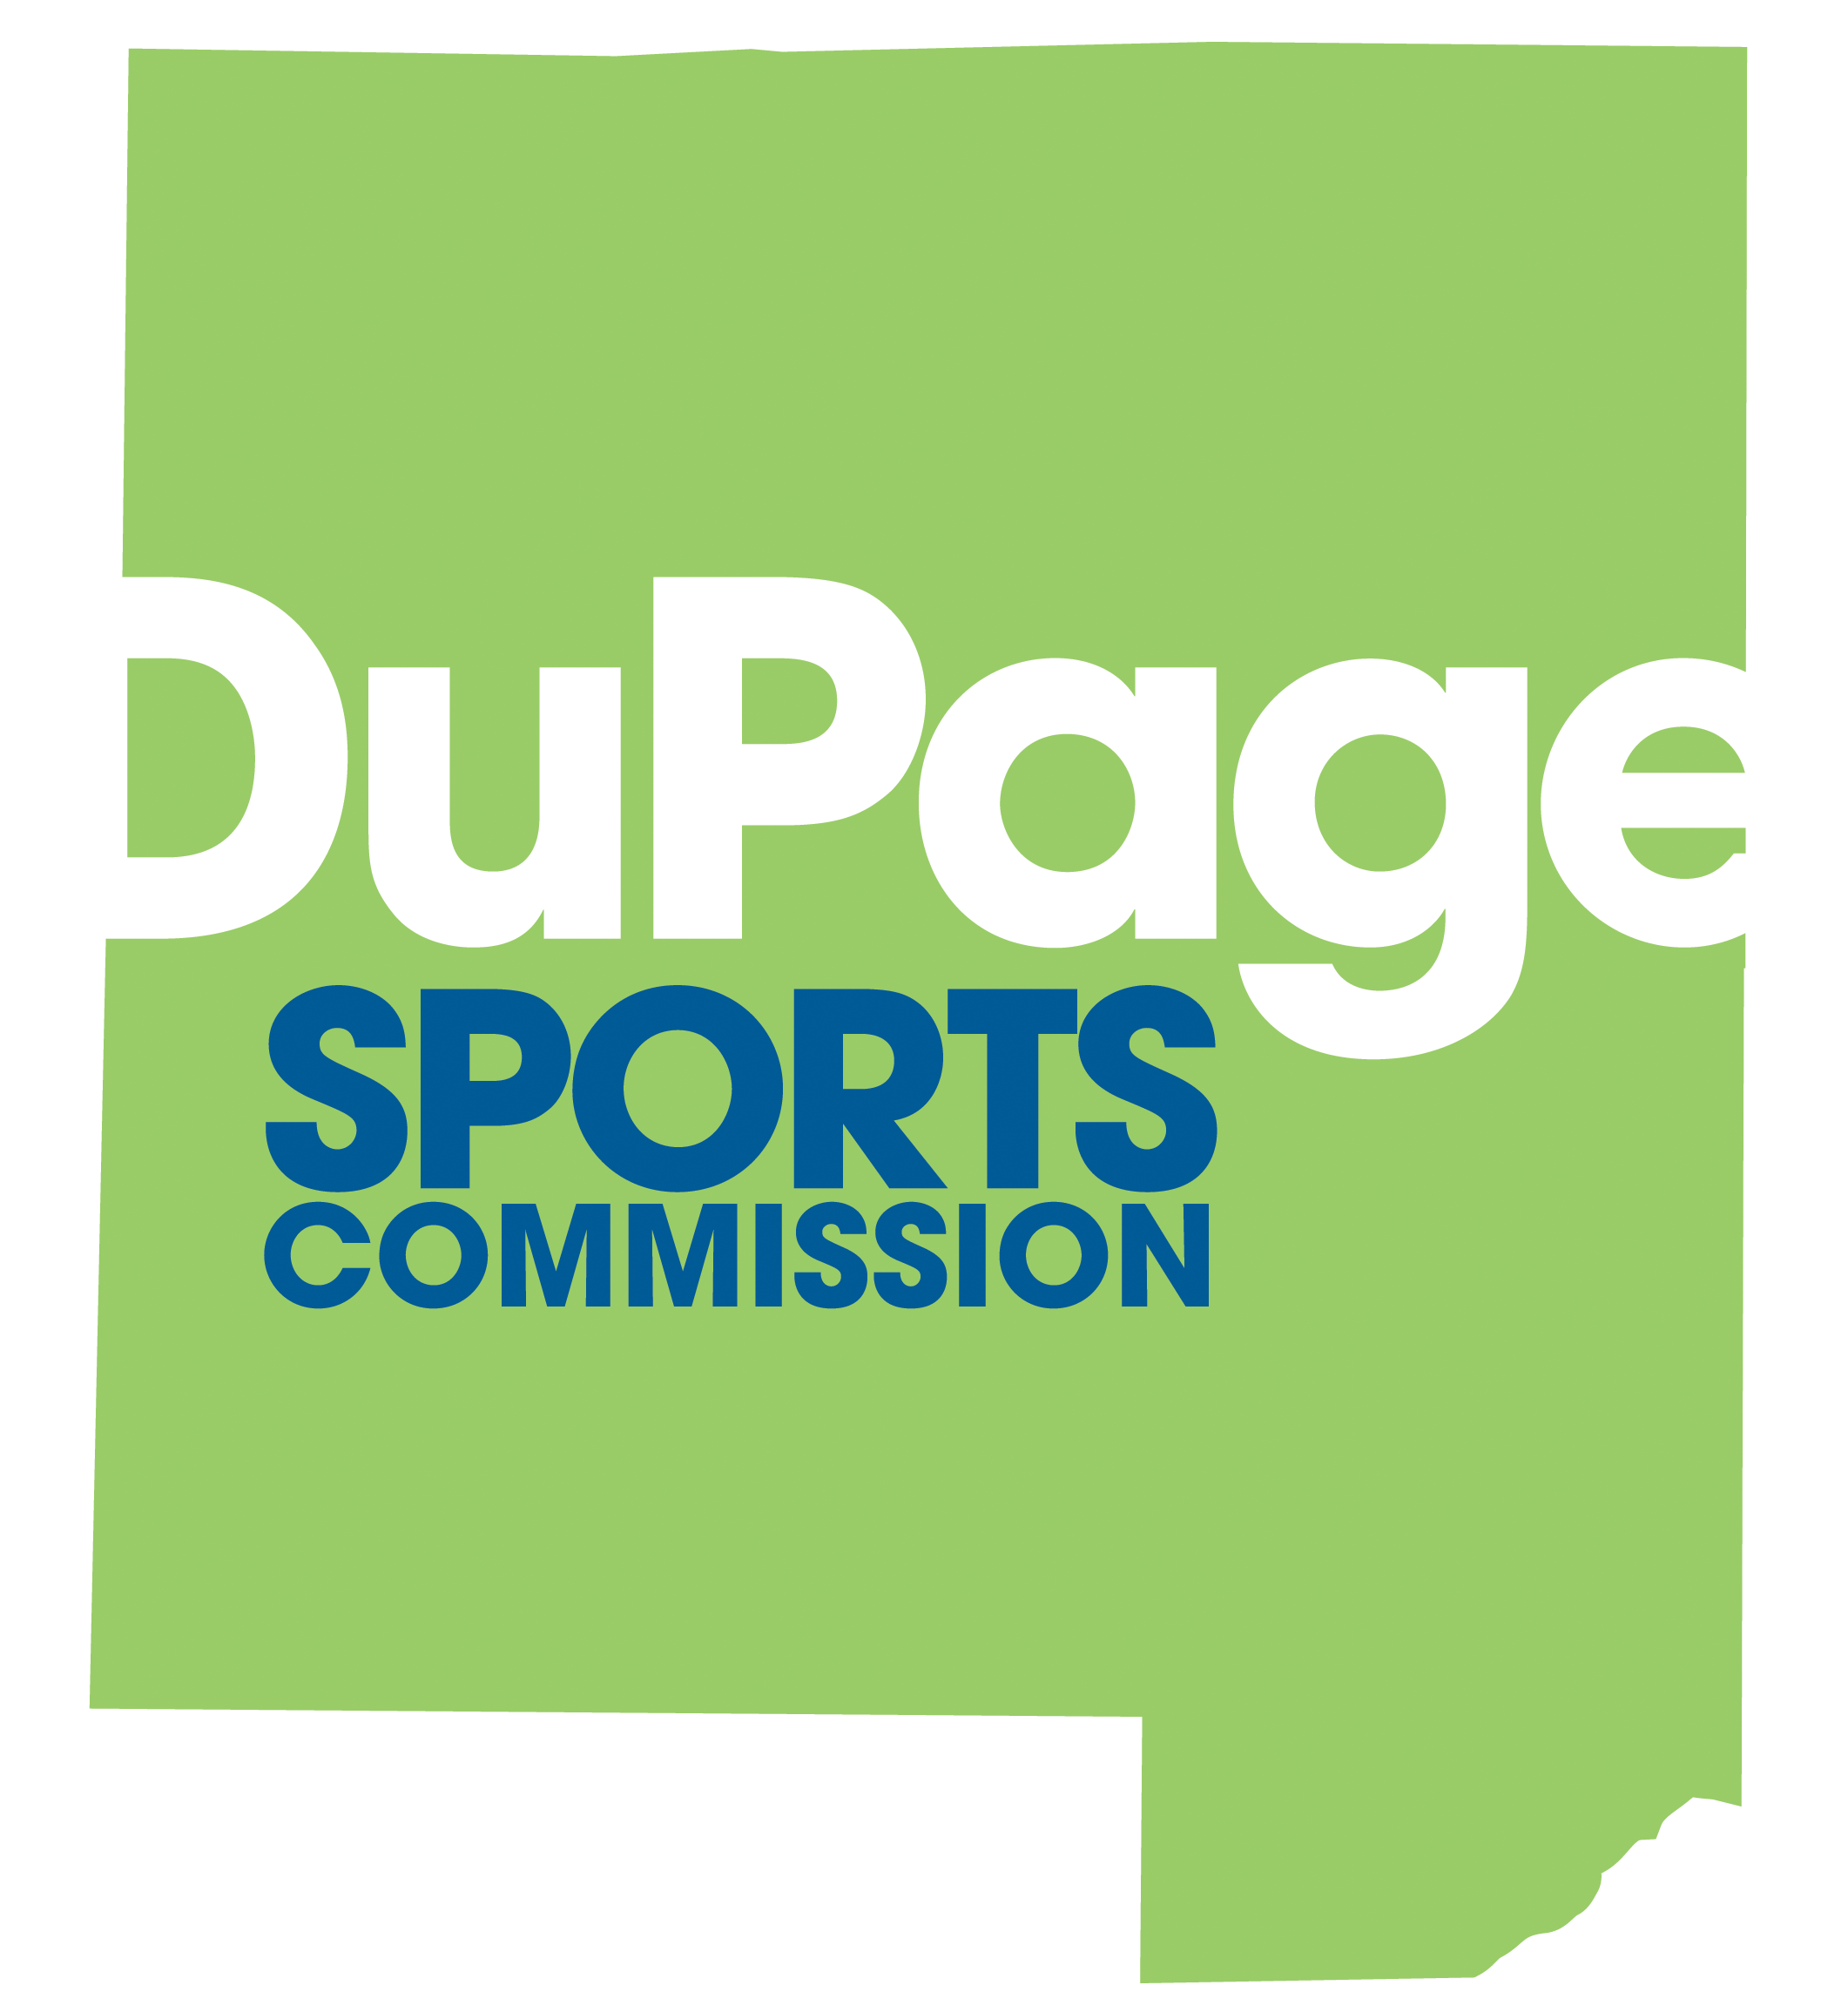 DuPage Sports